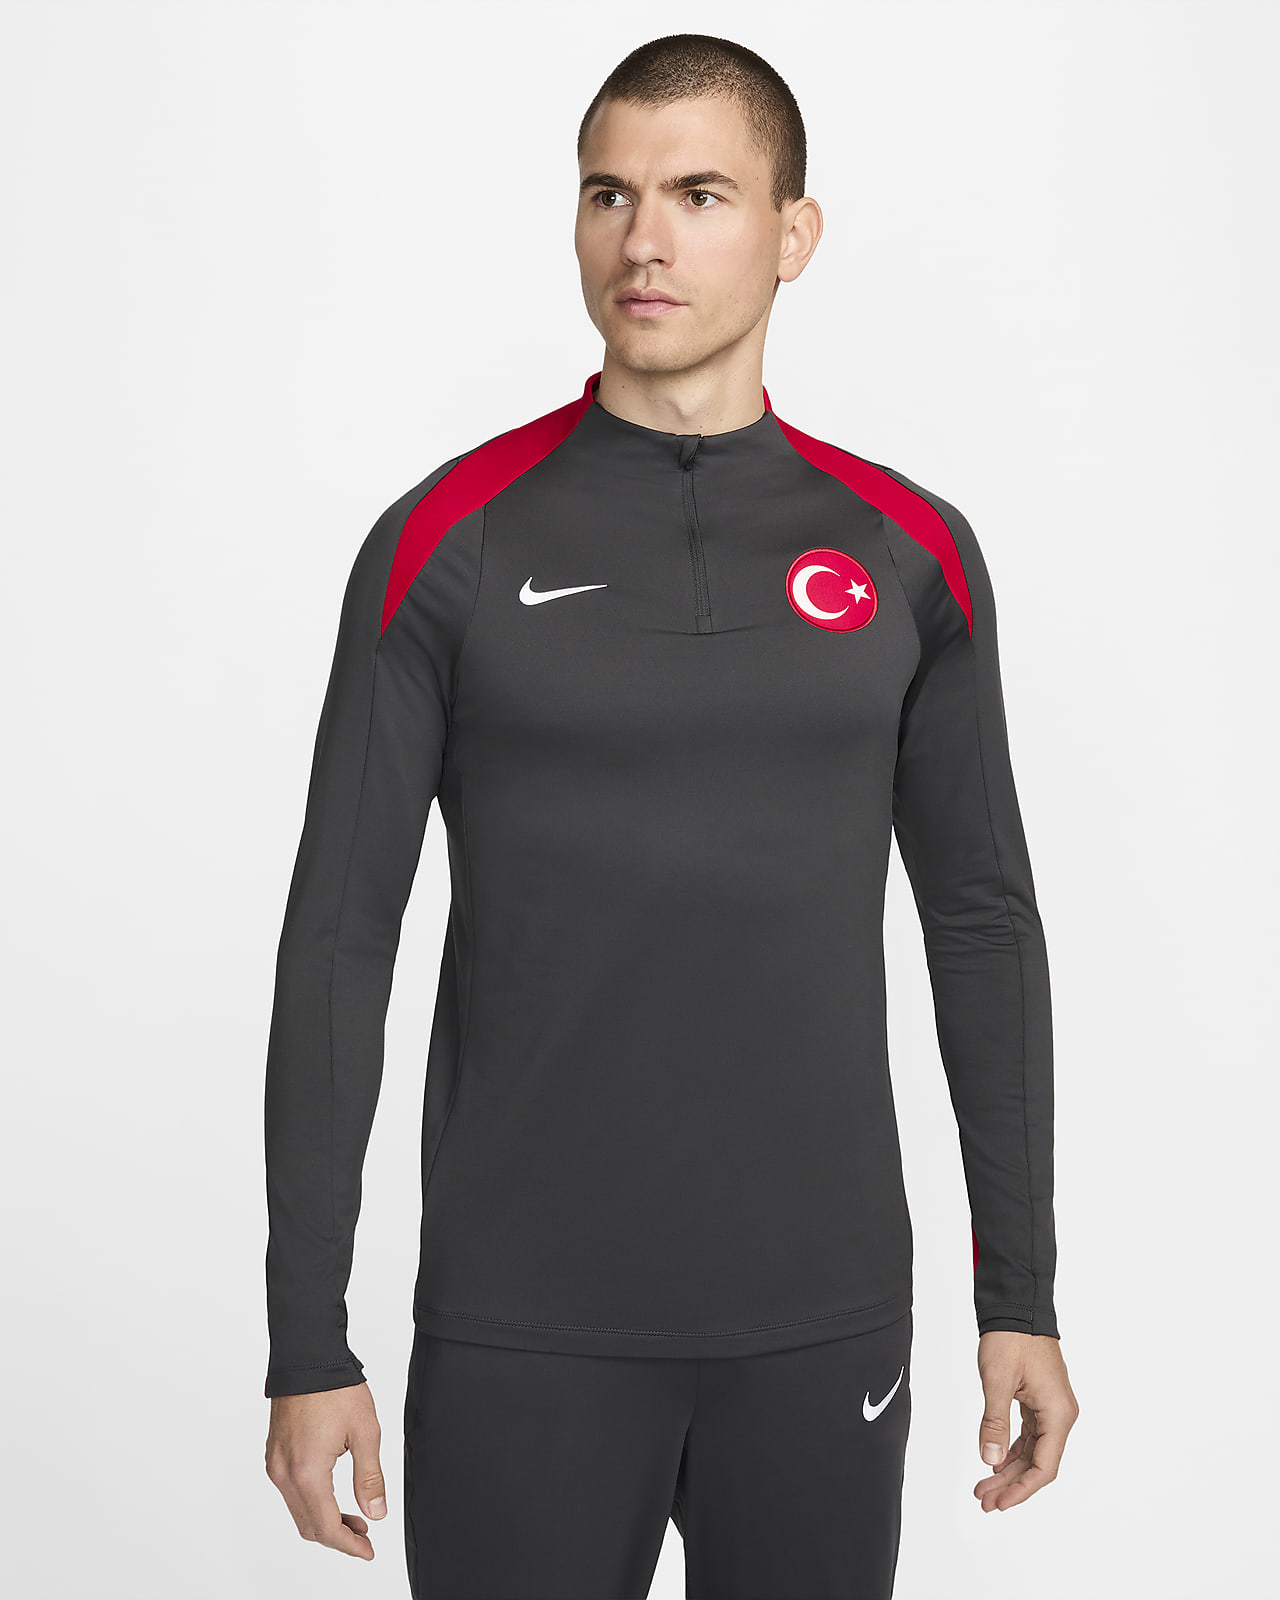 Türkiye Strike Men's Nike Dri-FIT Football Drill Top